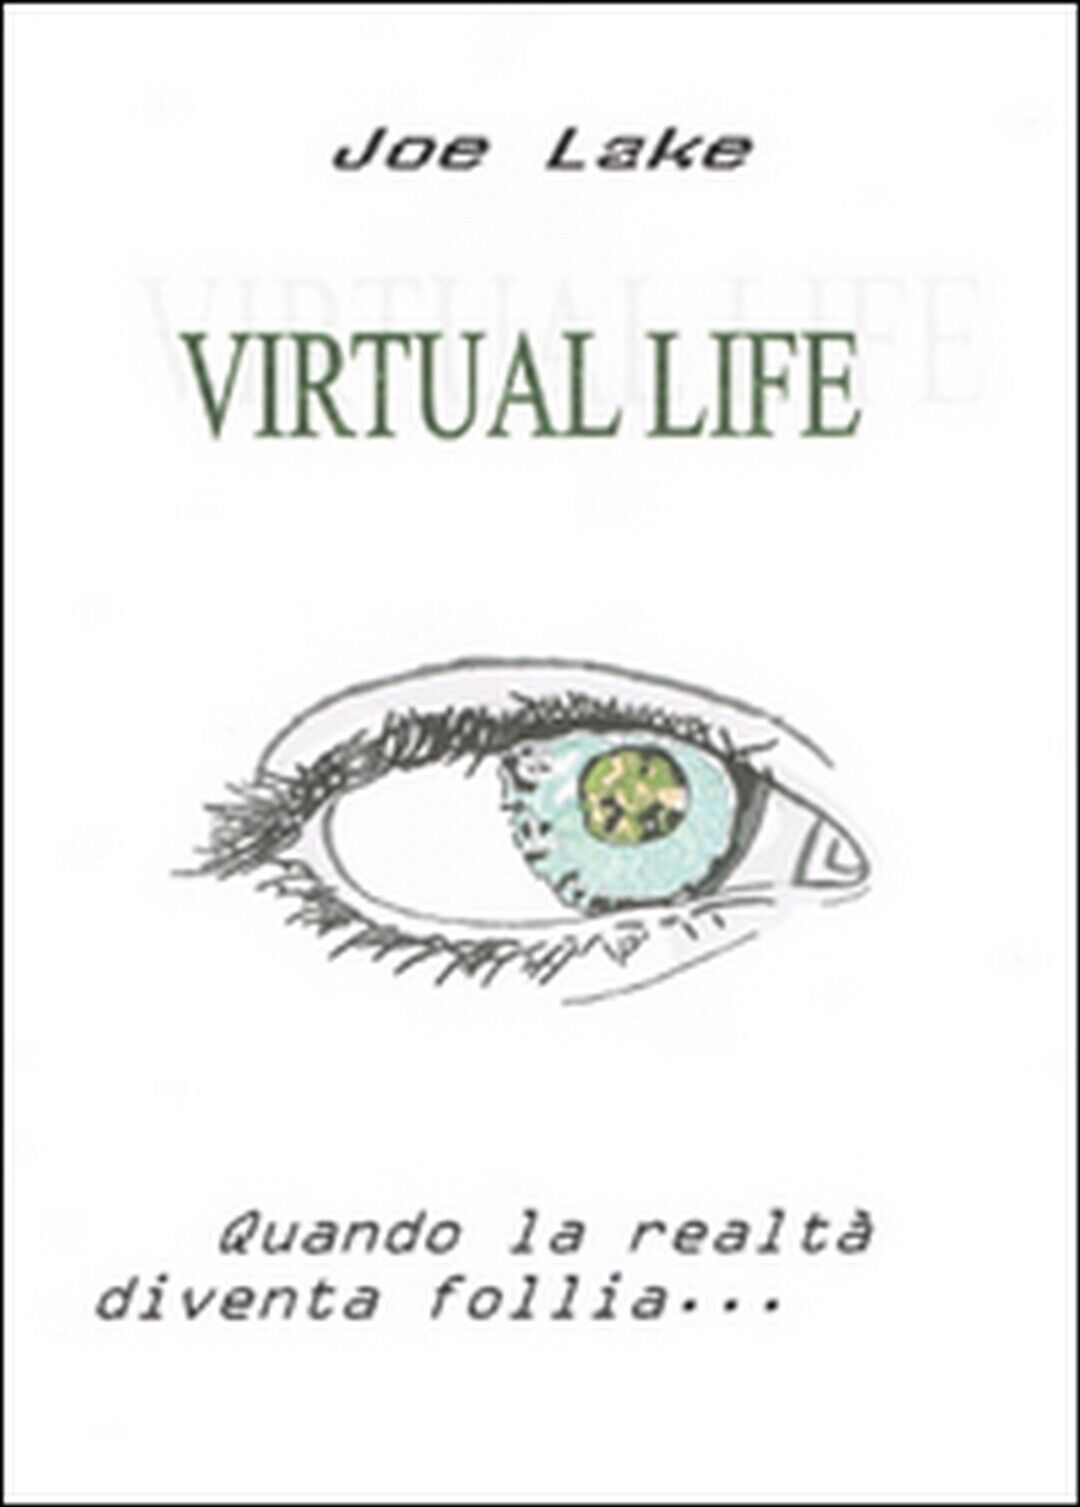 Virtual life. Realt? parallele  di Joe Lake,  2015,  Youcanprint